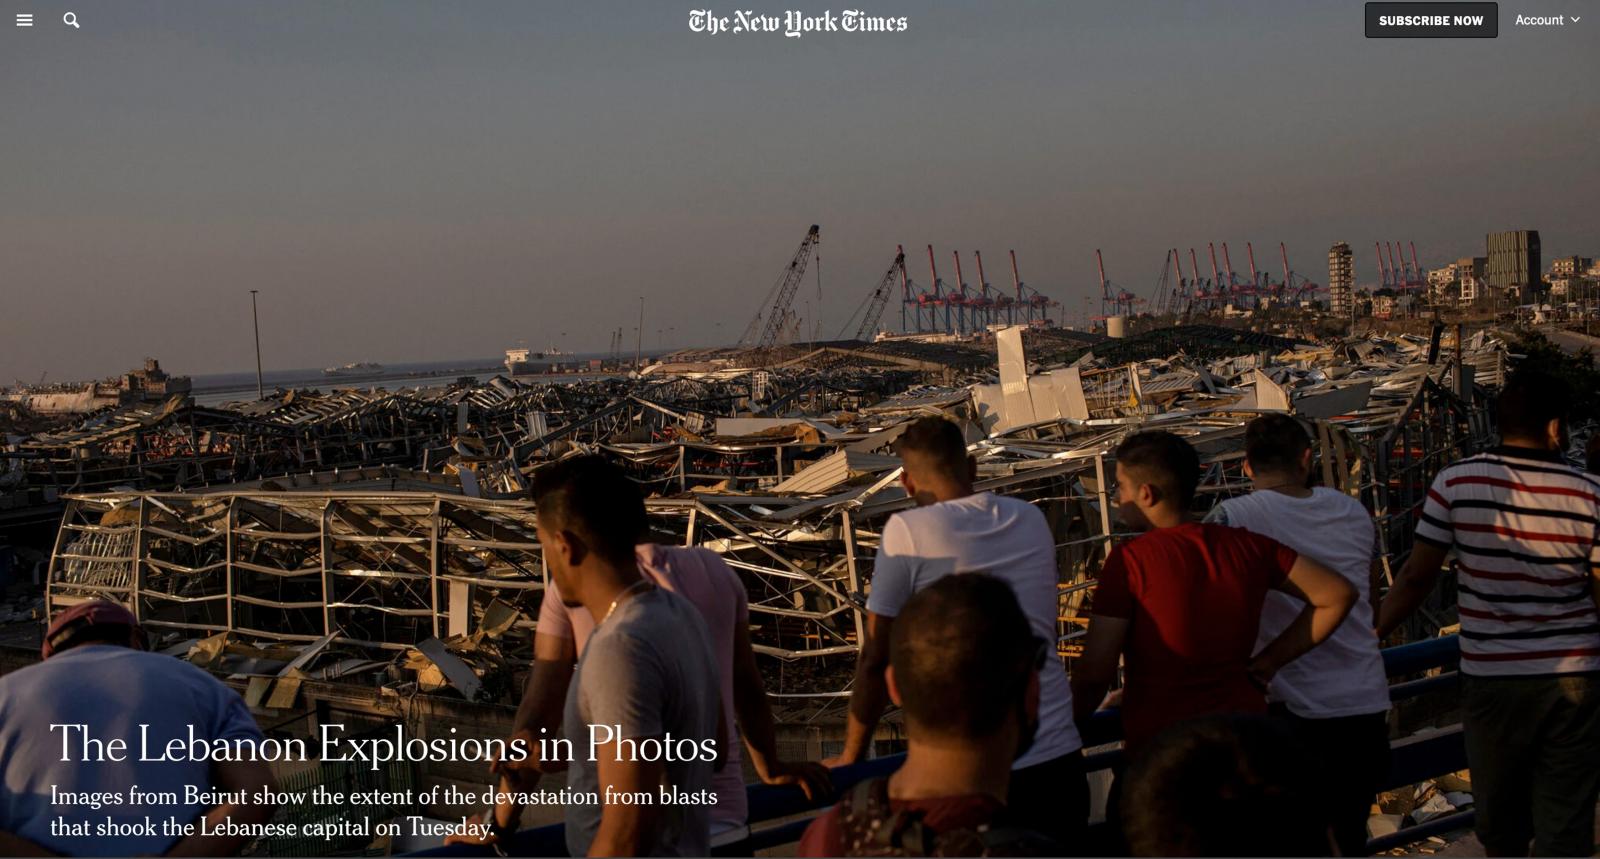 NYT: Beirut Aftermath